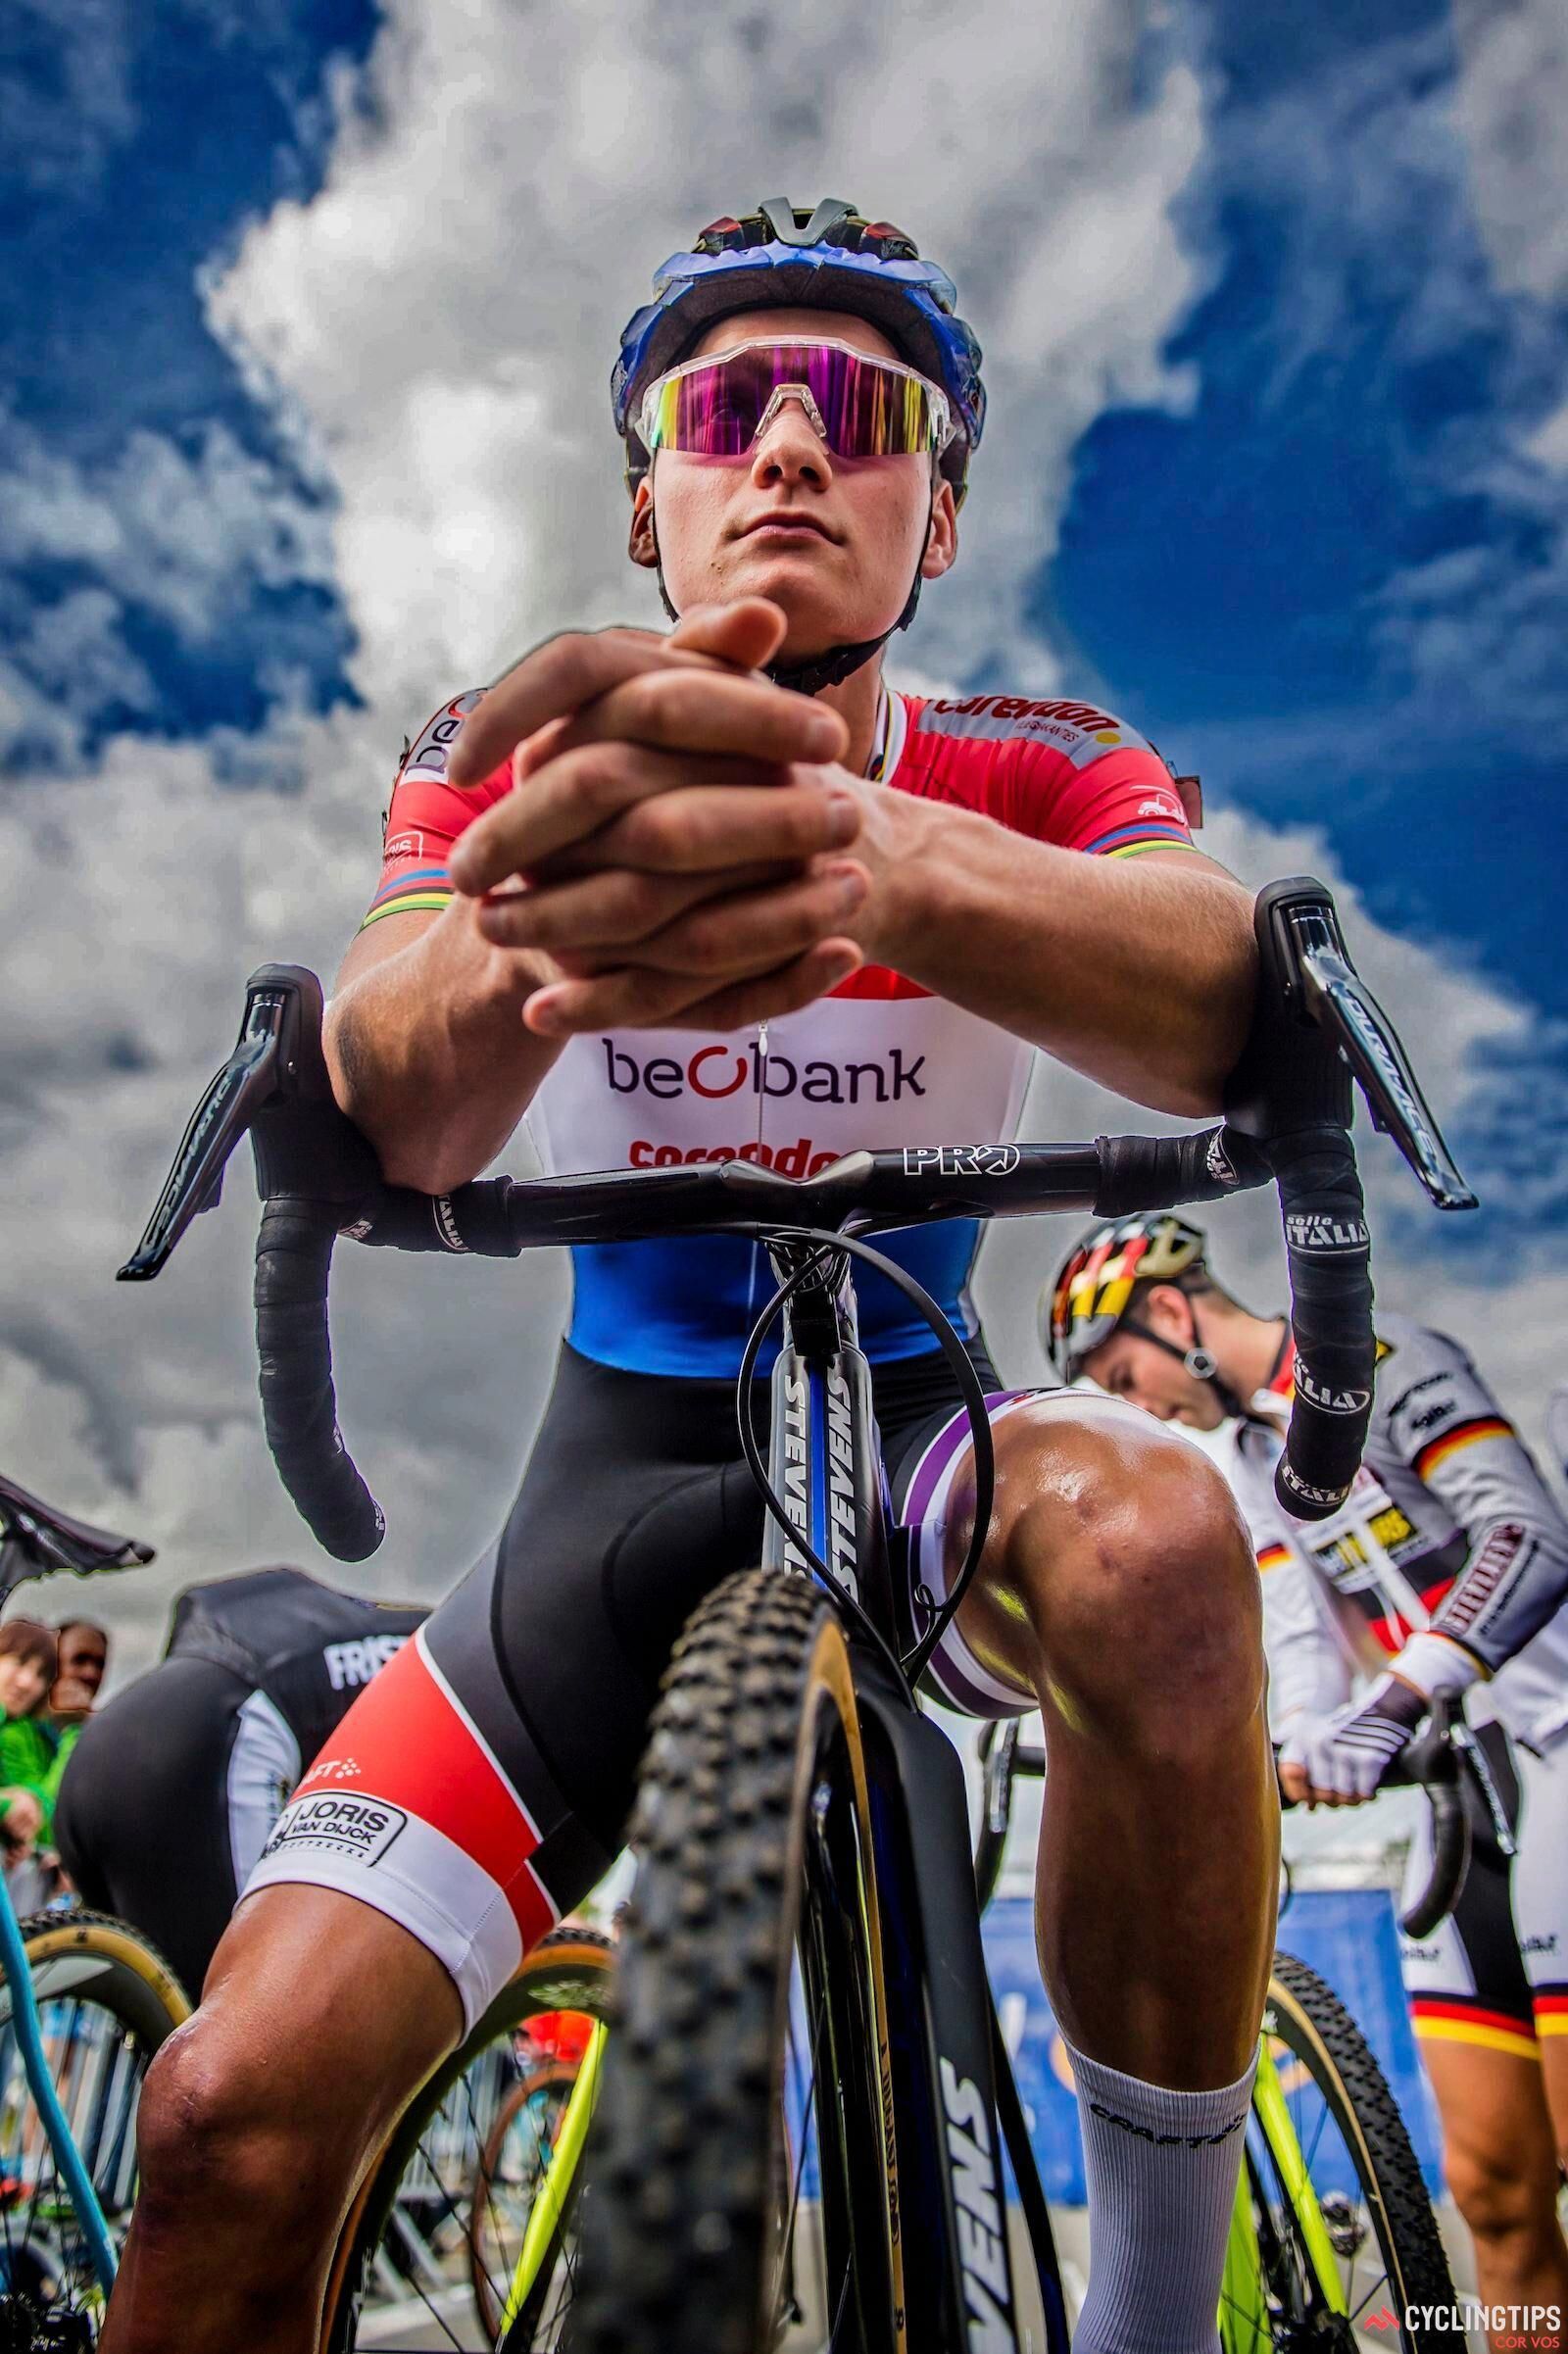 Could Mathieu Van der Poel be the greatest talent cycling has ever seen? #roadbikewomen, roadbikeaccessori. Fotos de ciclistas, Fotos ciclismo, Fotos de bicicletas